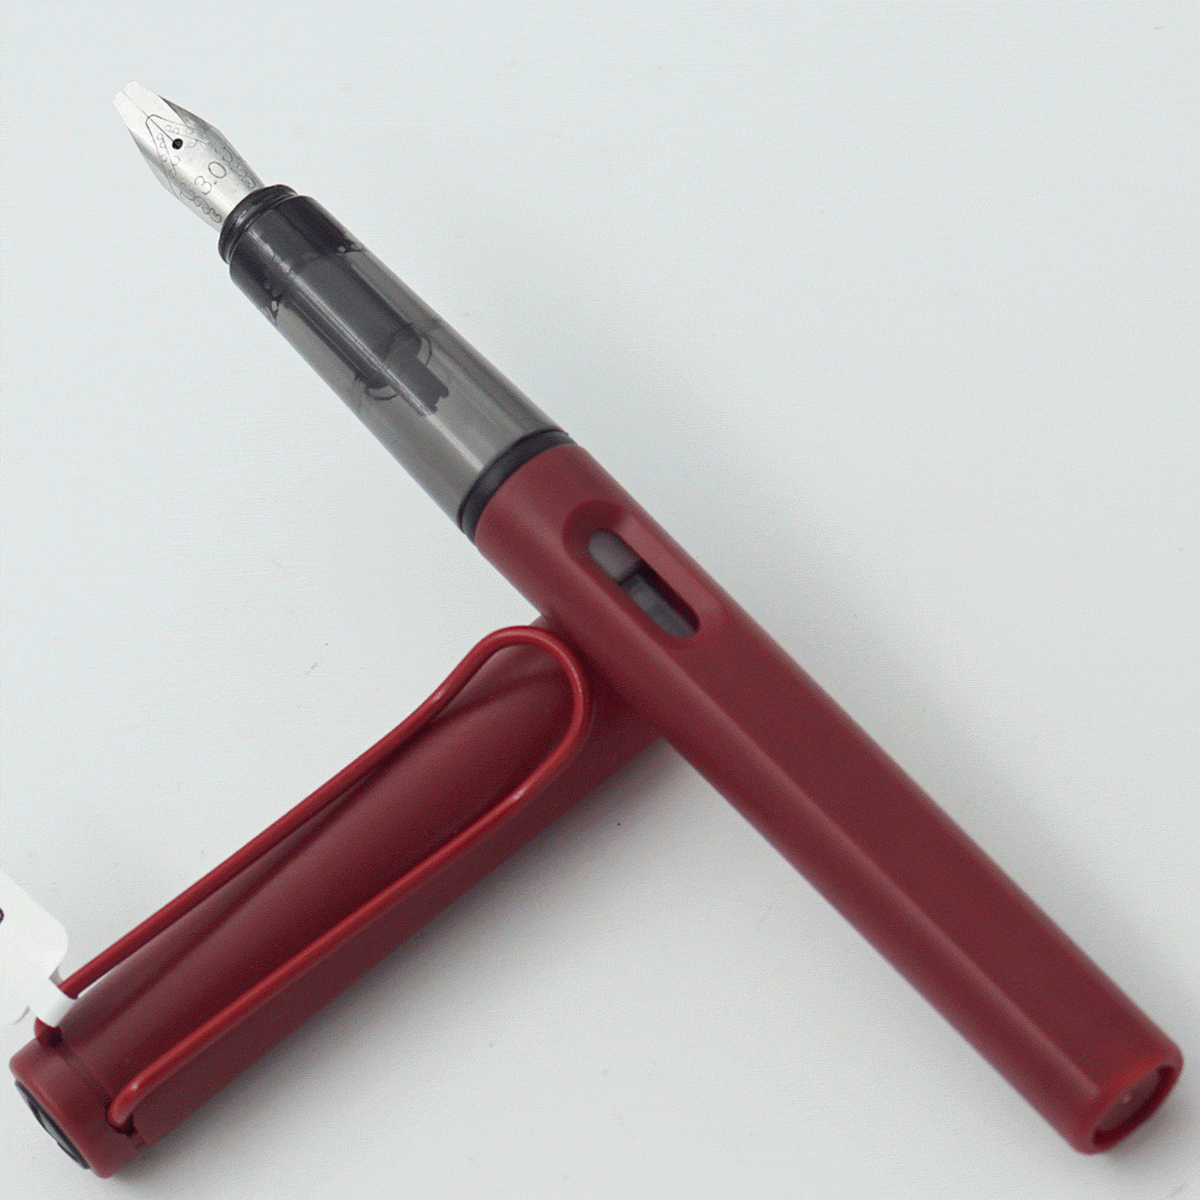 Luoshi 3987 Maroon Color Body With Cap 3.0 Nib Converter Type Calligraphy Fountain Pen SKU 24233